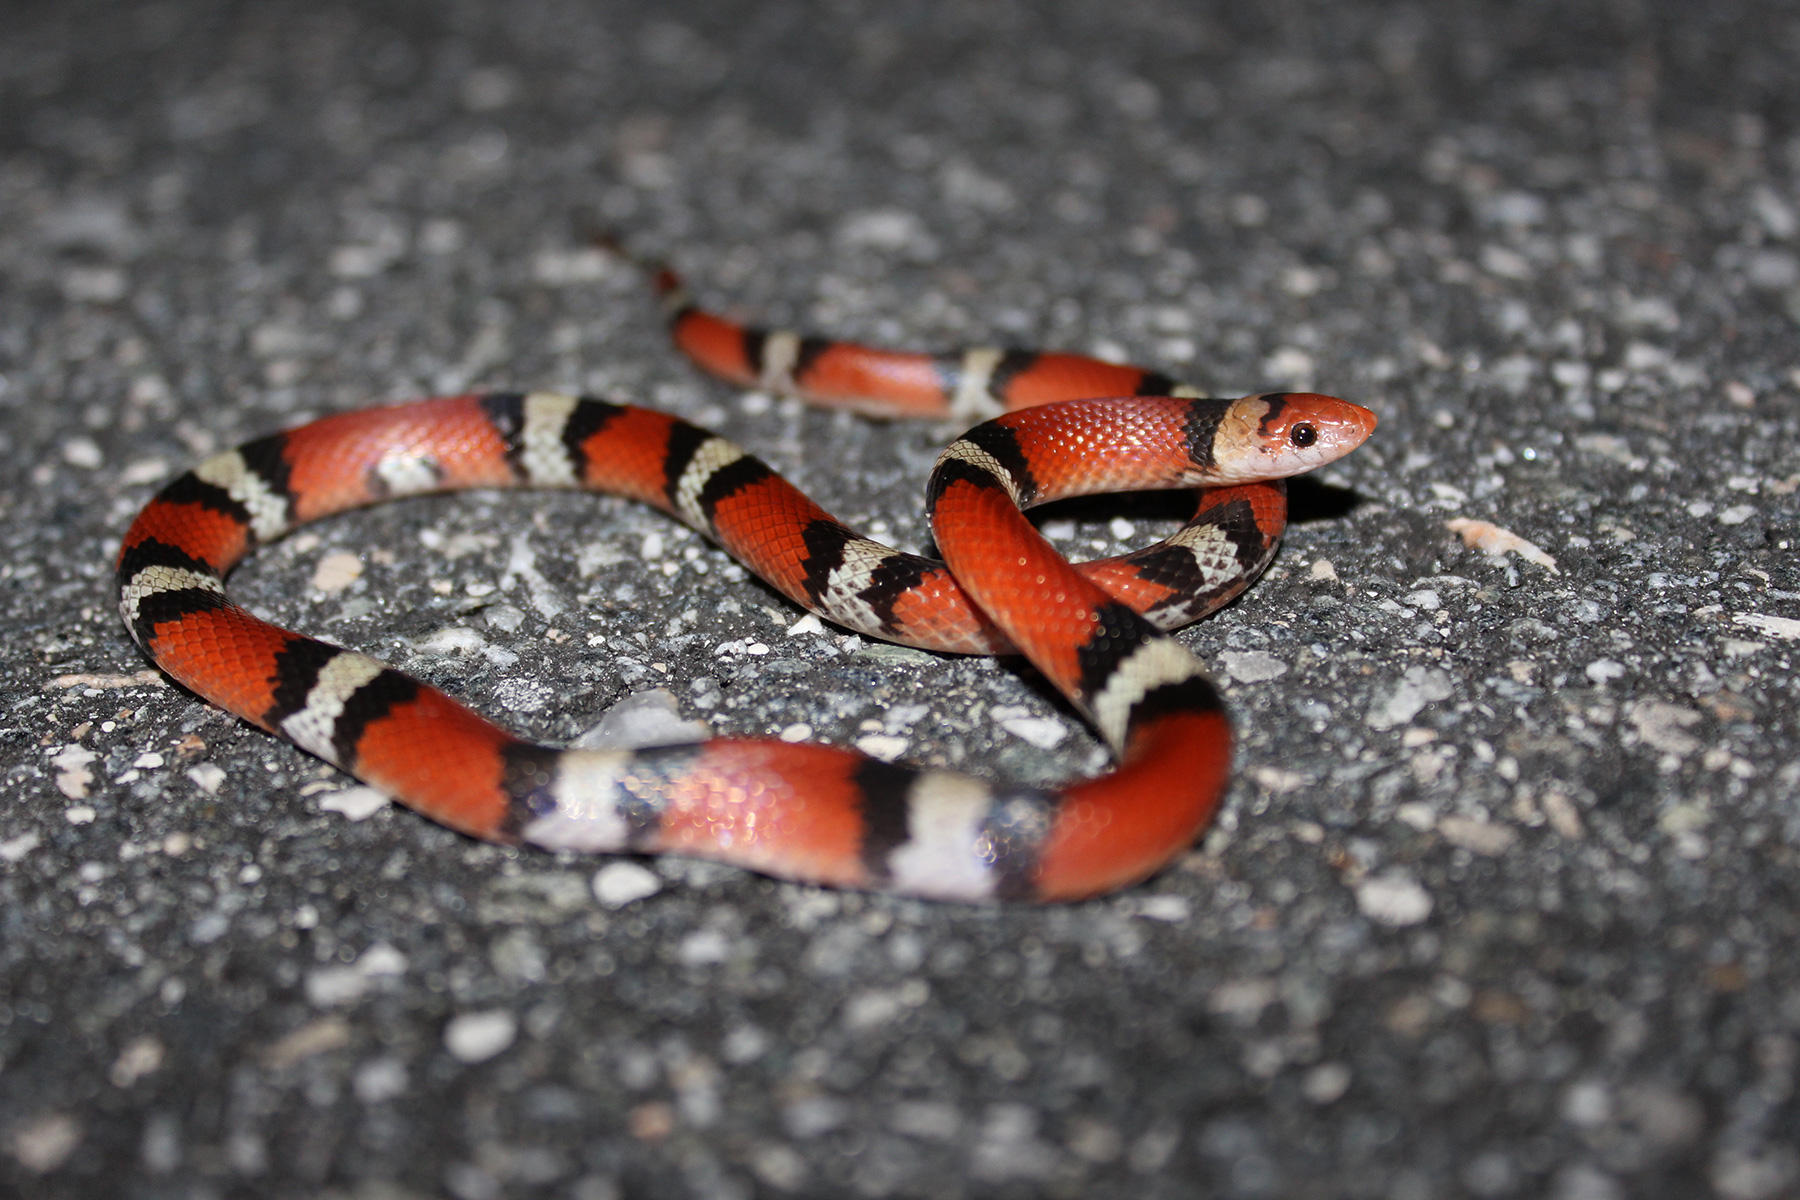 Scarletsnake – Florida Snake ID Guide